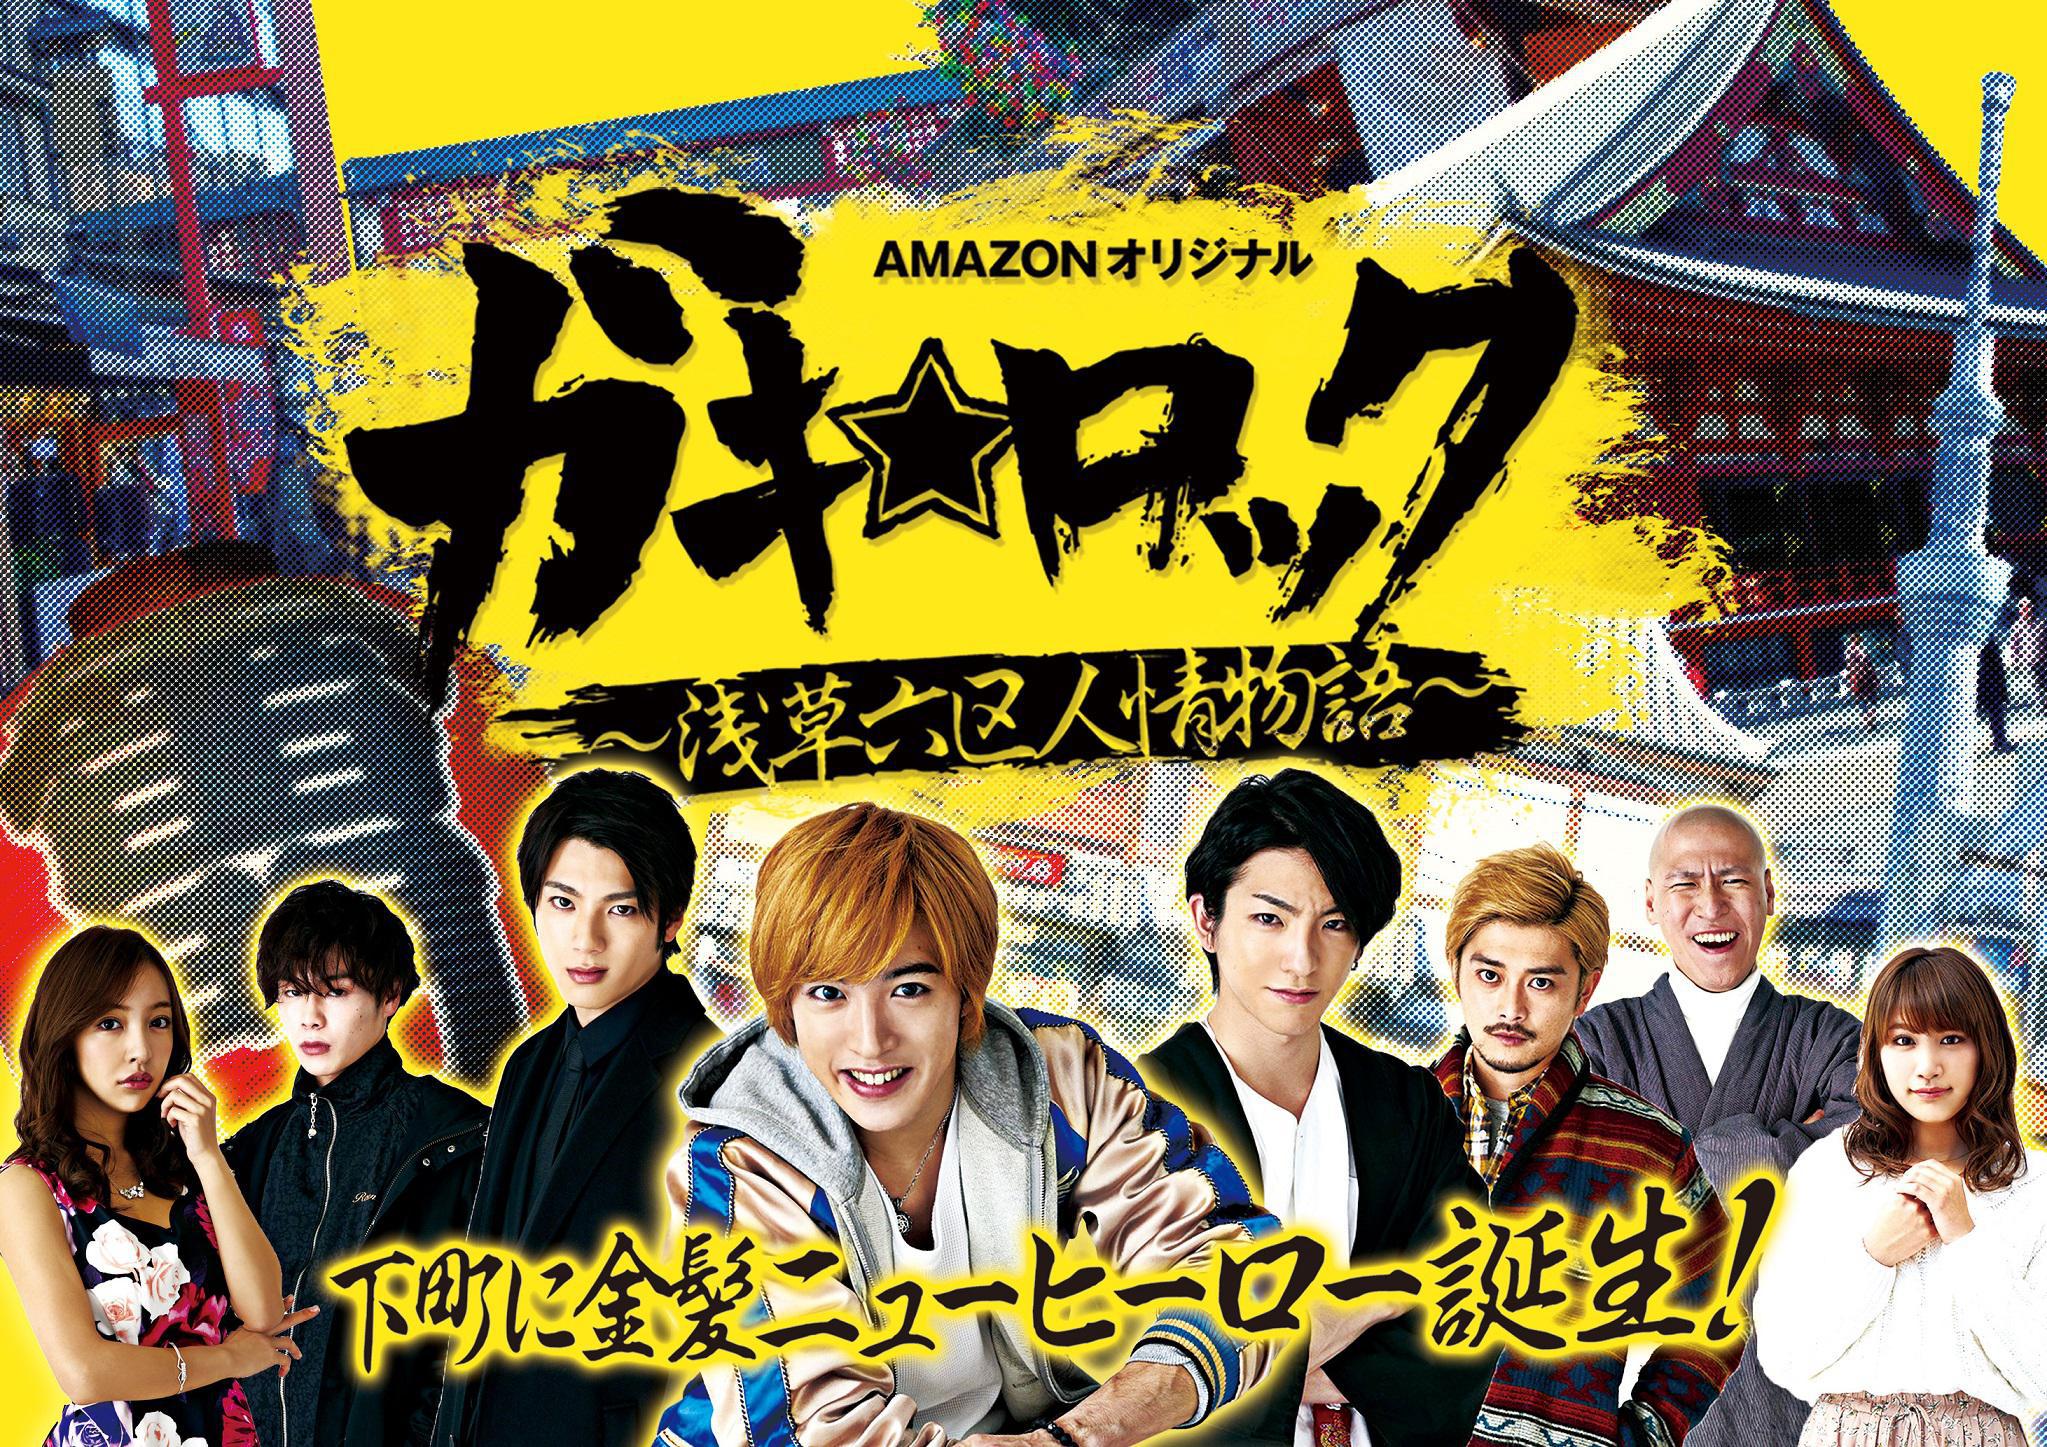 TV ratings for Gaki Rock: Asakusa Roku-ku Ninjo Monogatari in Malaysia. Amazon Prime Video TV series